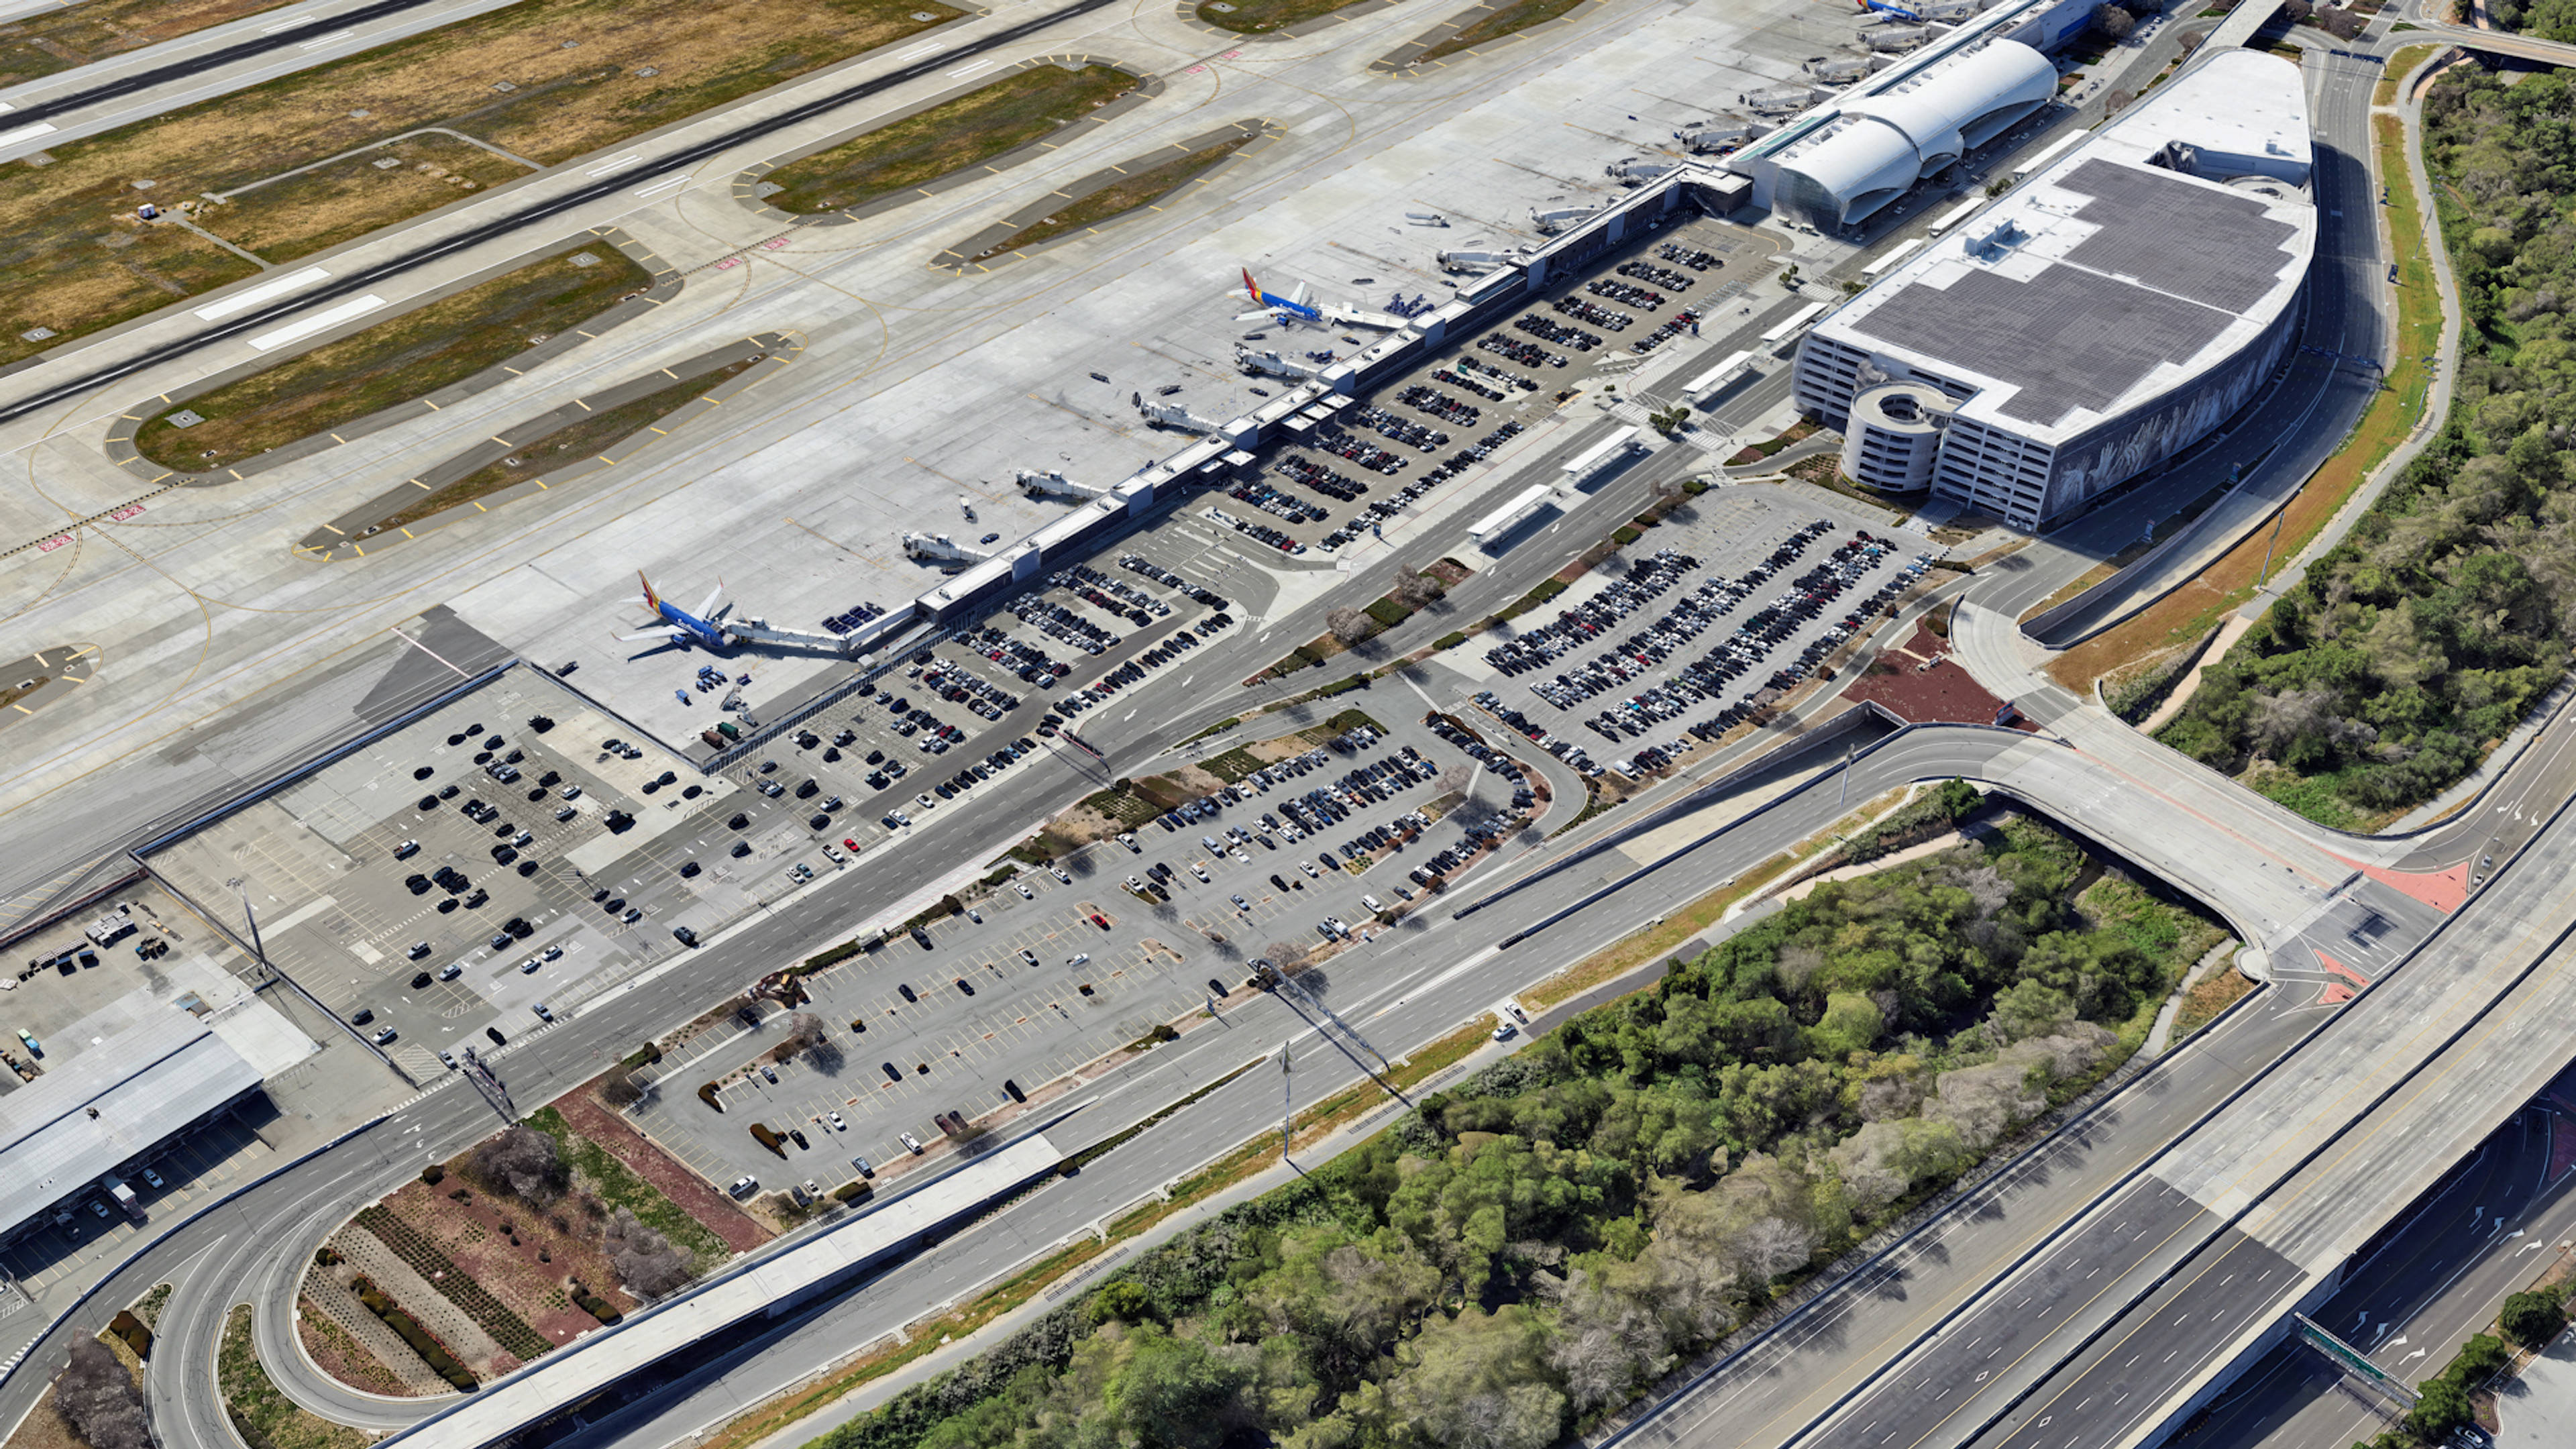  Aerial View of San Jose Airport Parking